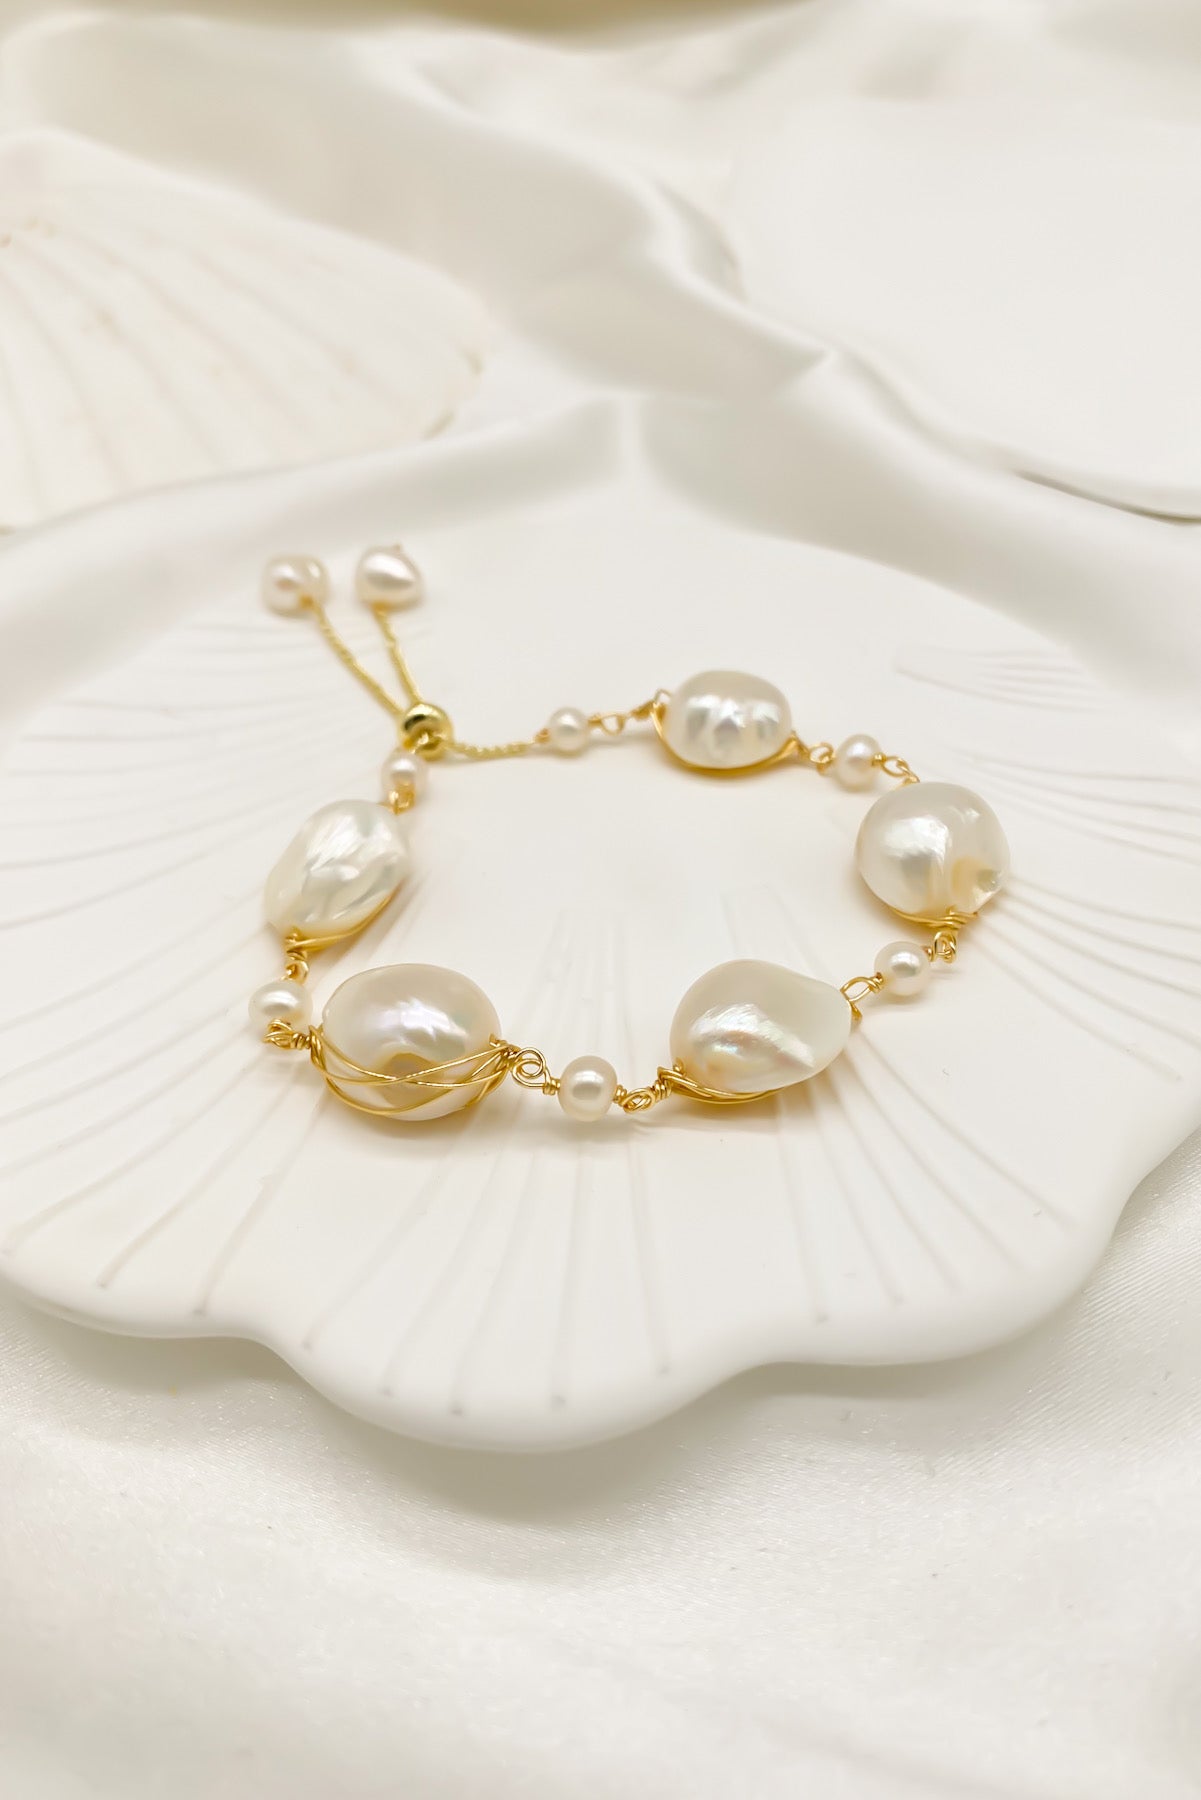 SKYE Shop Chic Modern Elegant Classy Women Jewelry French Parisian Minimalist Harper Freshwater Pearl Bracelet 6